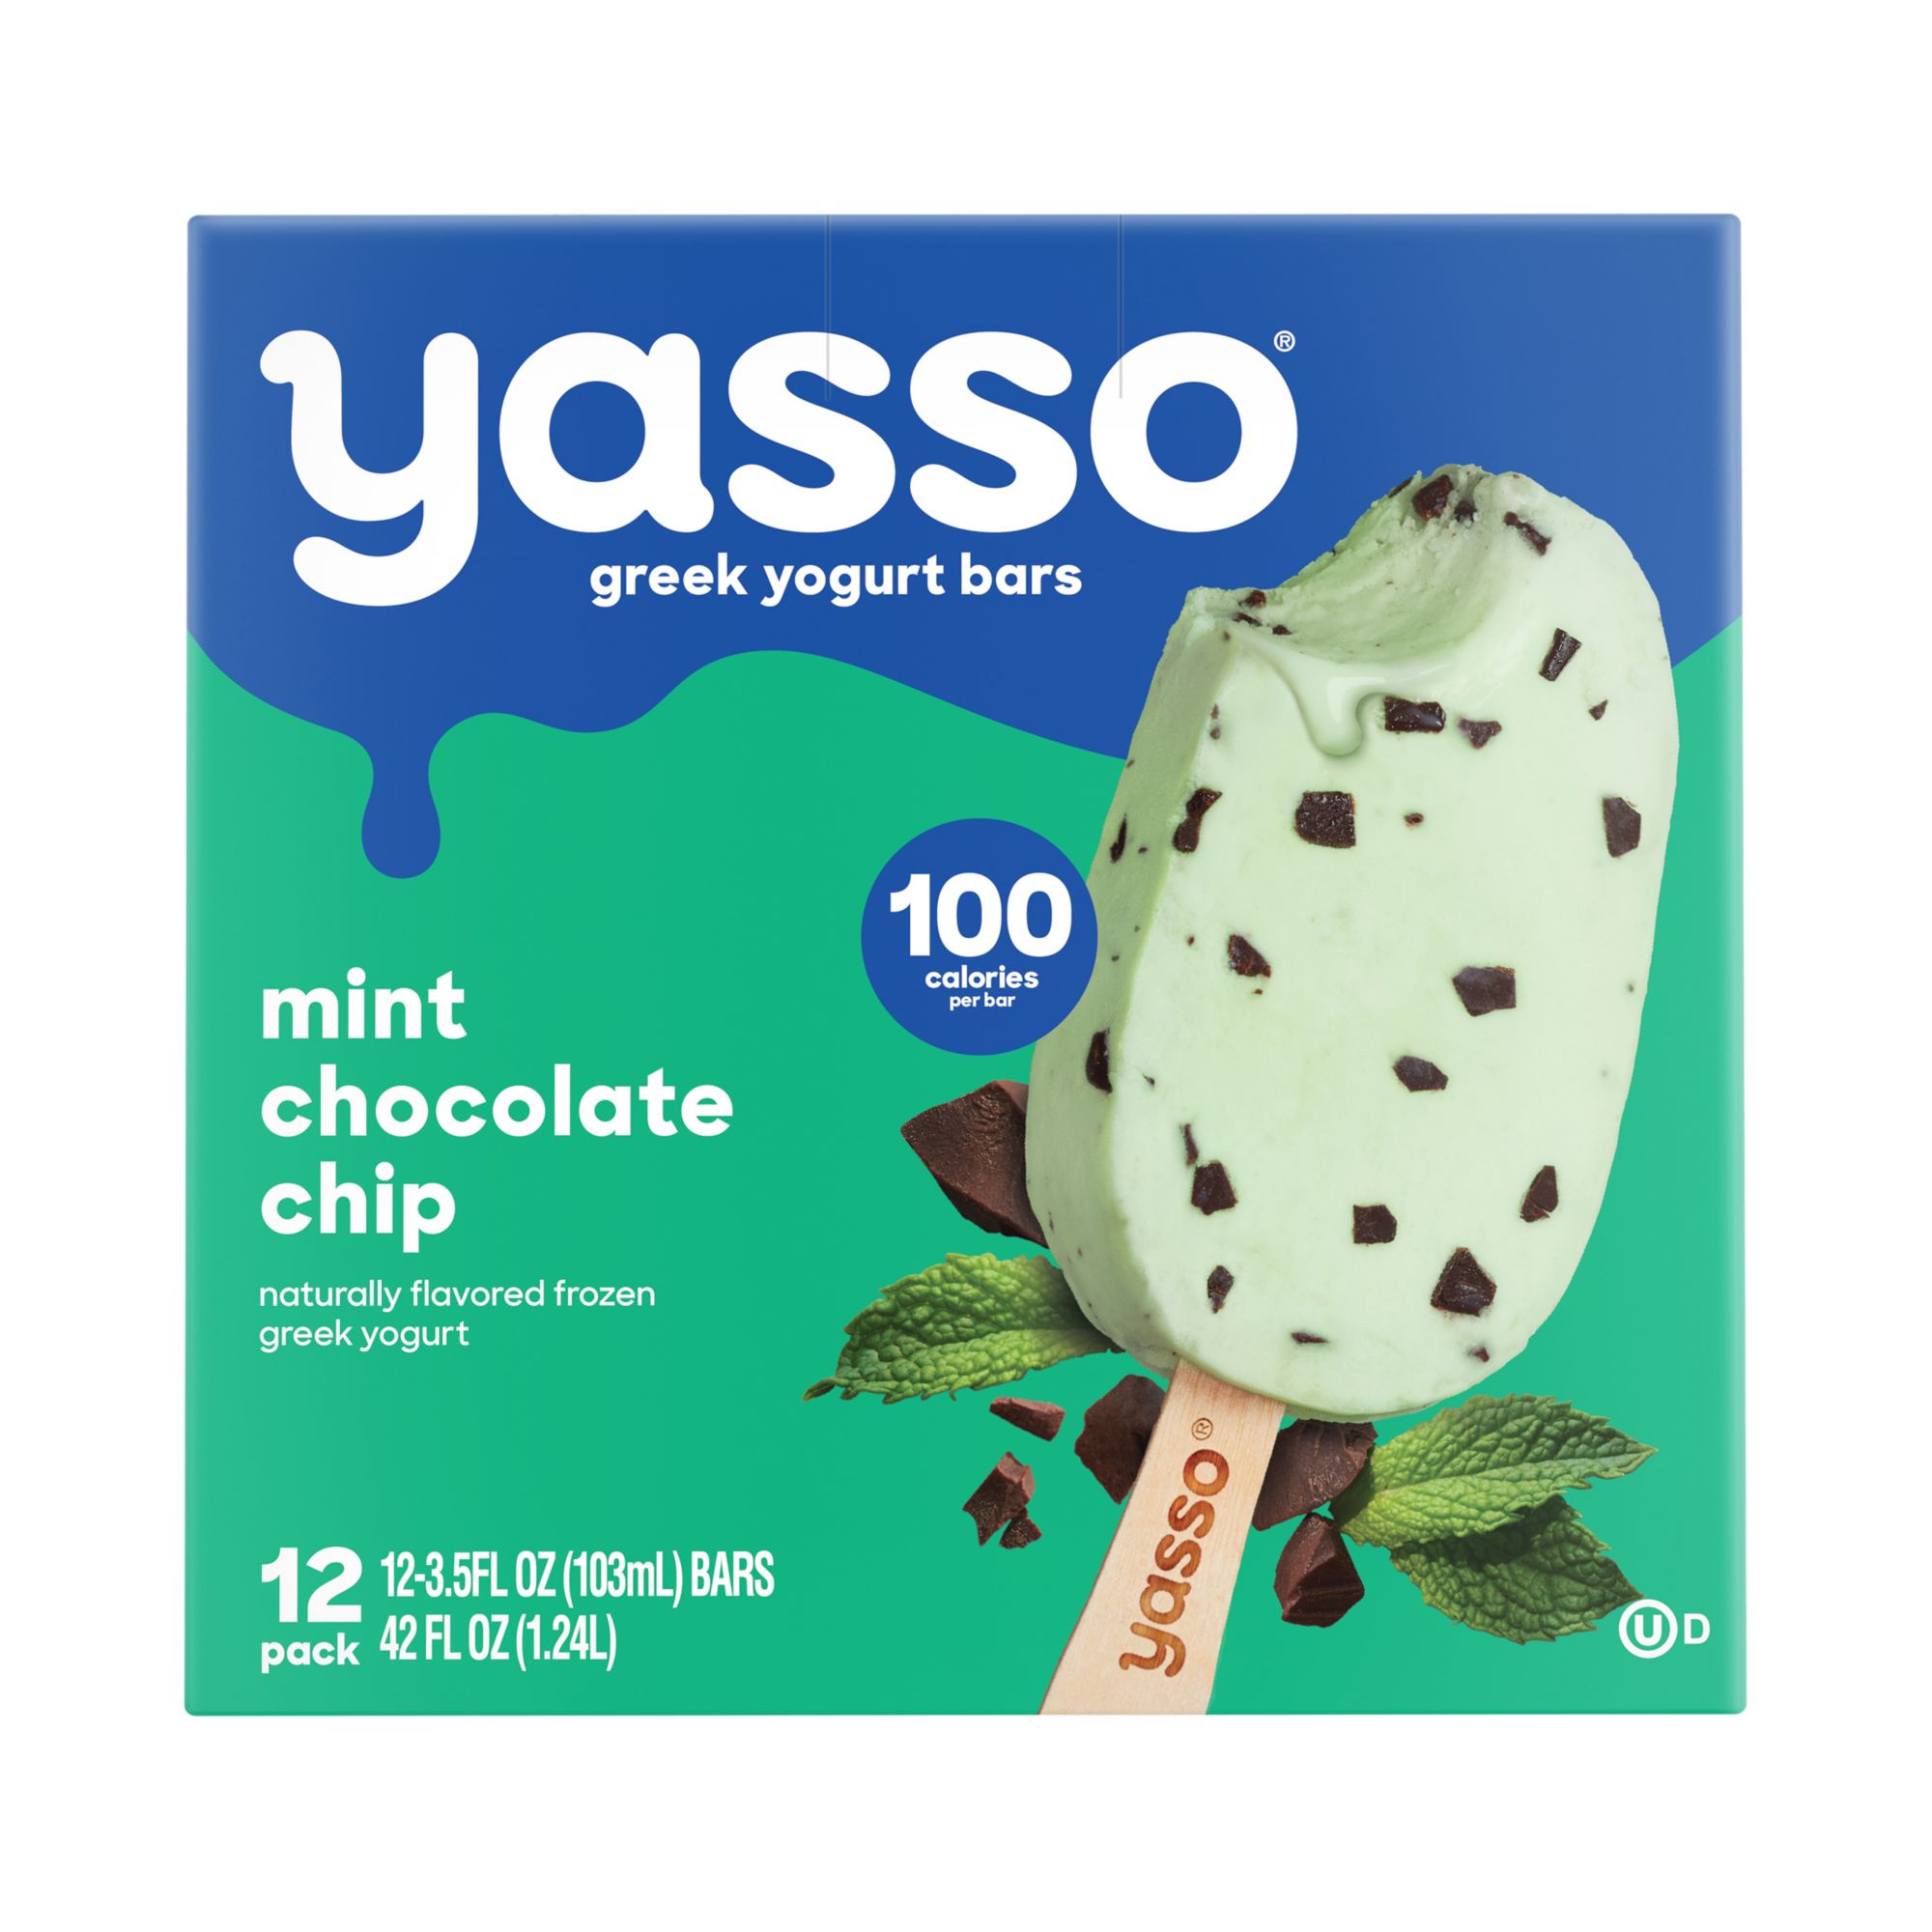 Yasso Mint Chocolate Chip Frozen Greek Yogurt Bars, 12 ct./3.5 oz.